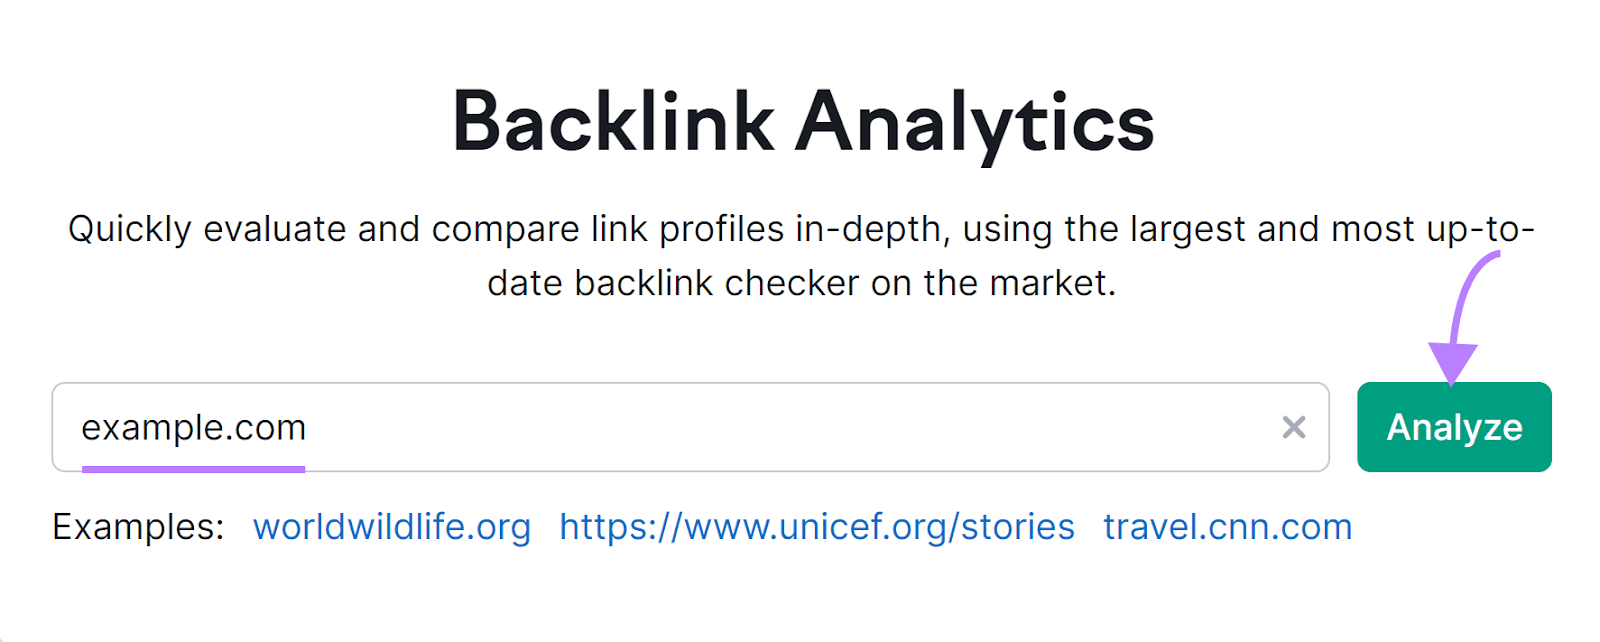 Backlink Analytics tool search bar